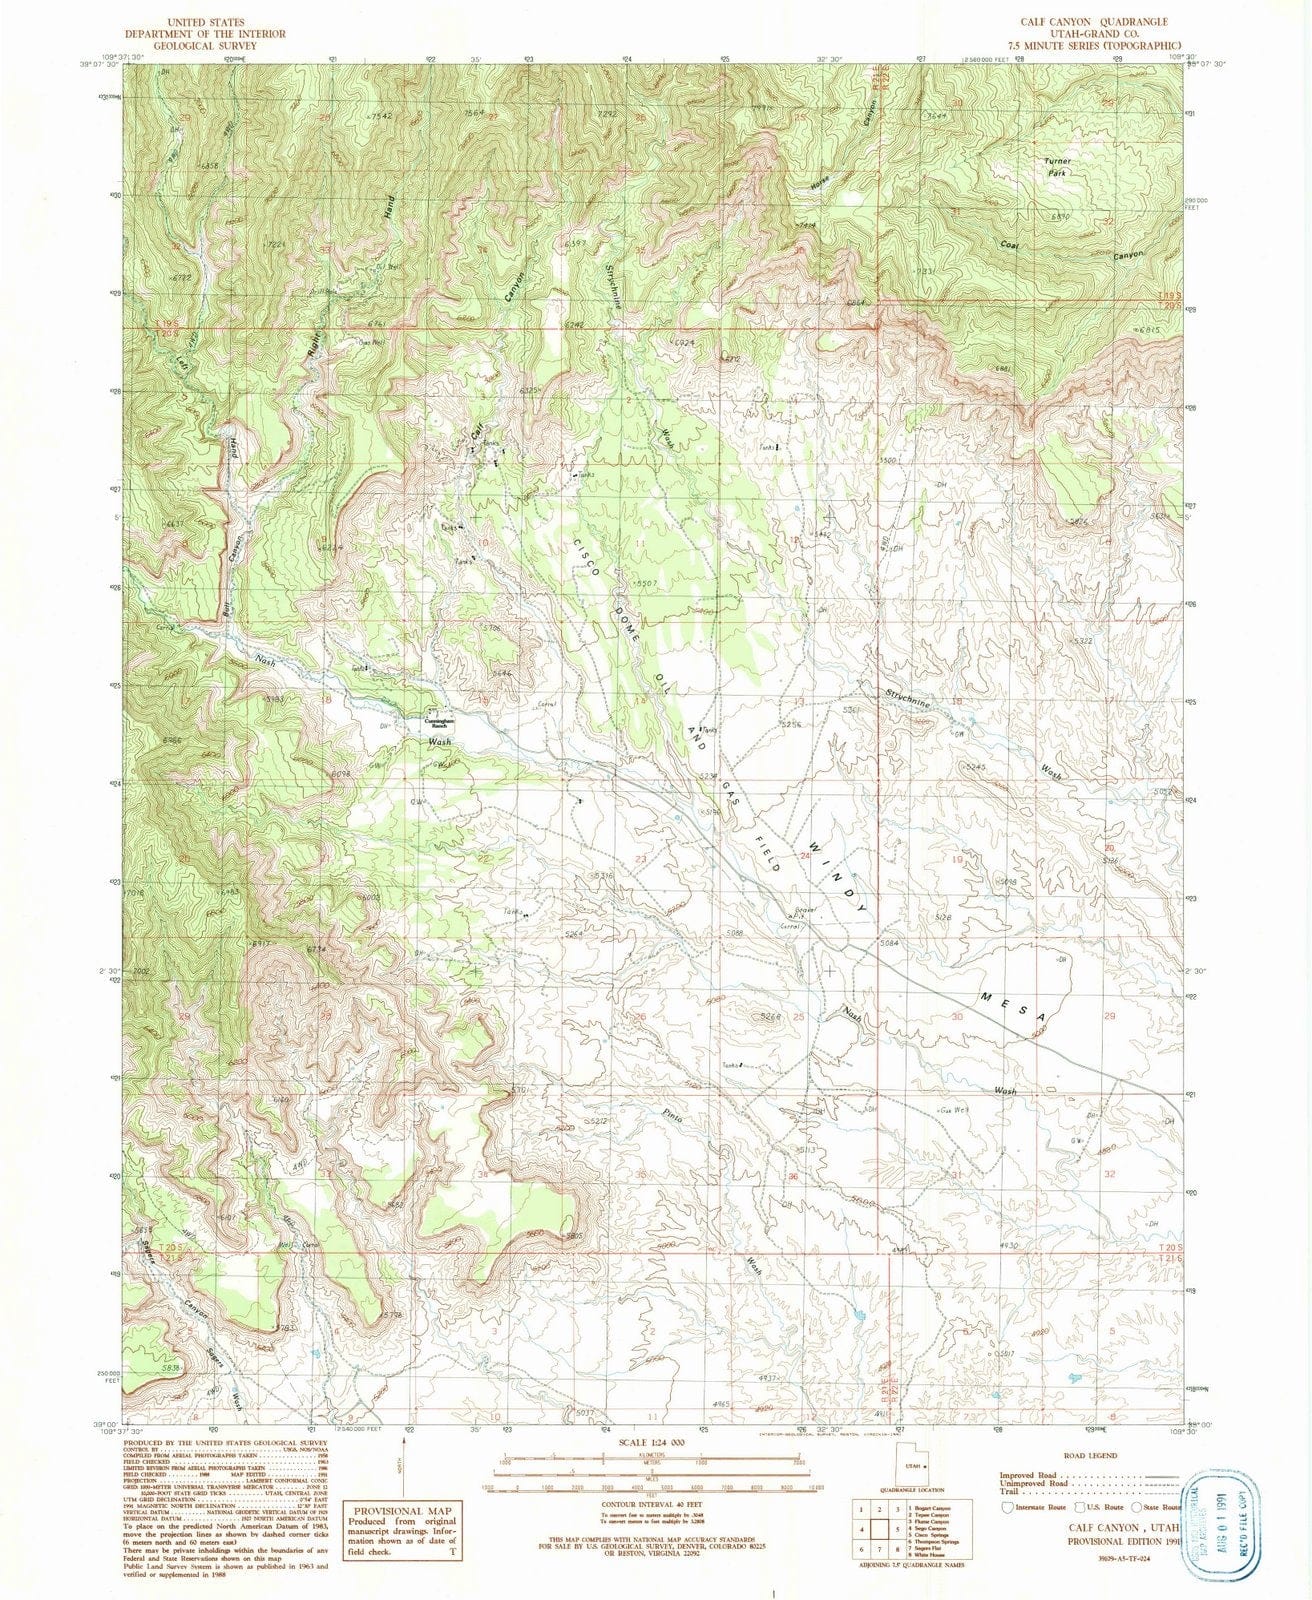 1991 Calf Canyon, UT - Utah - USGS Topographic Map